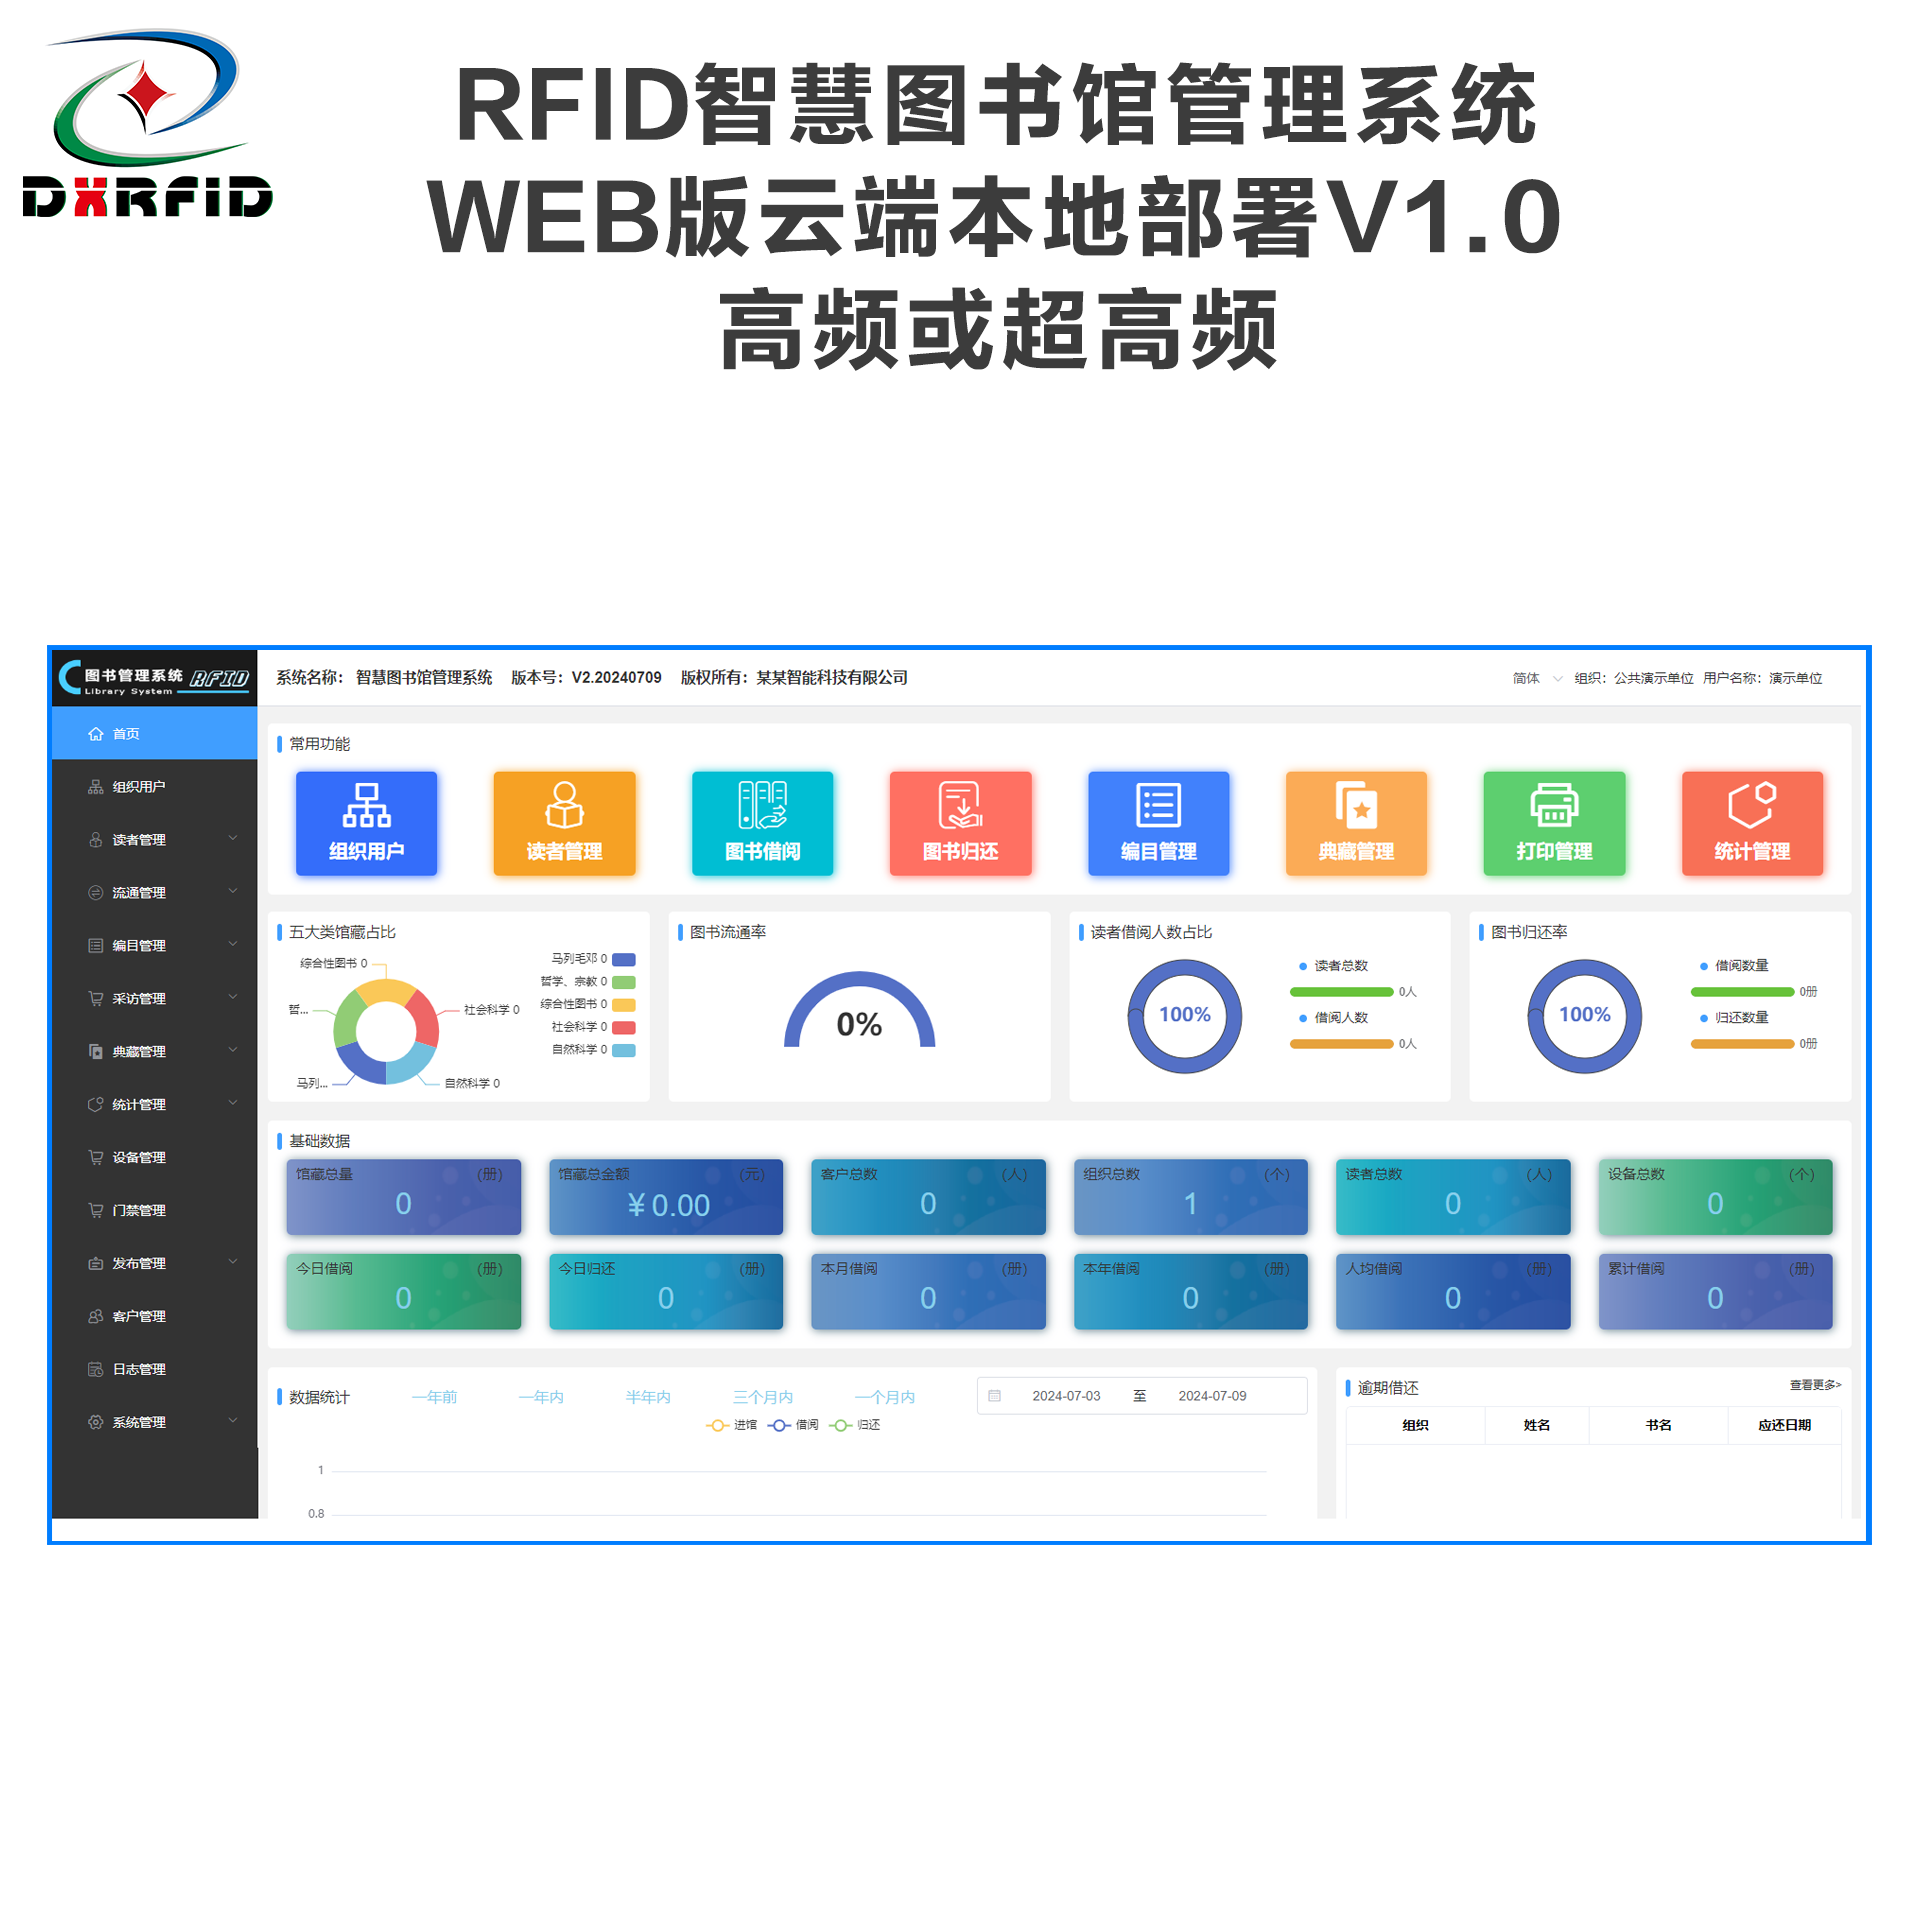 RFID智慧图书管理系统